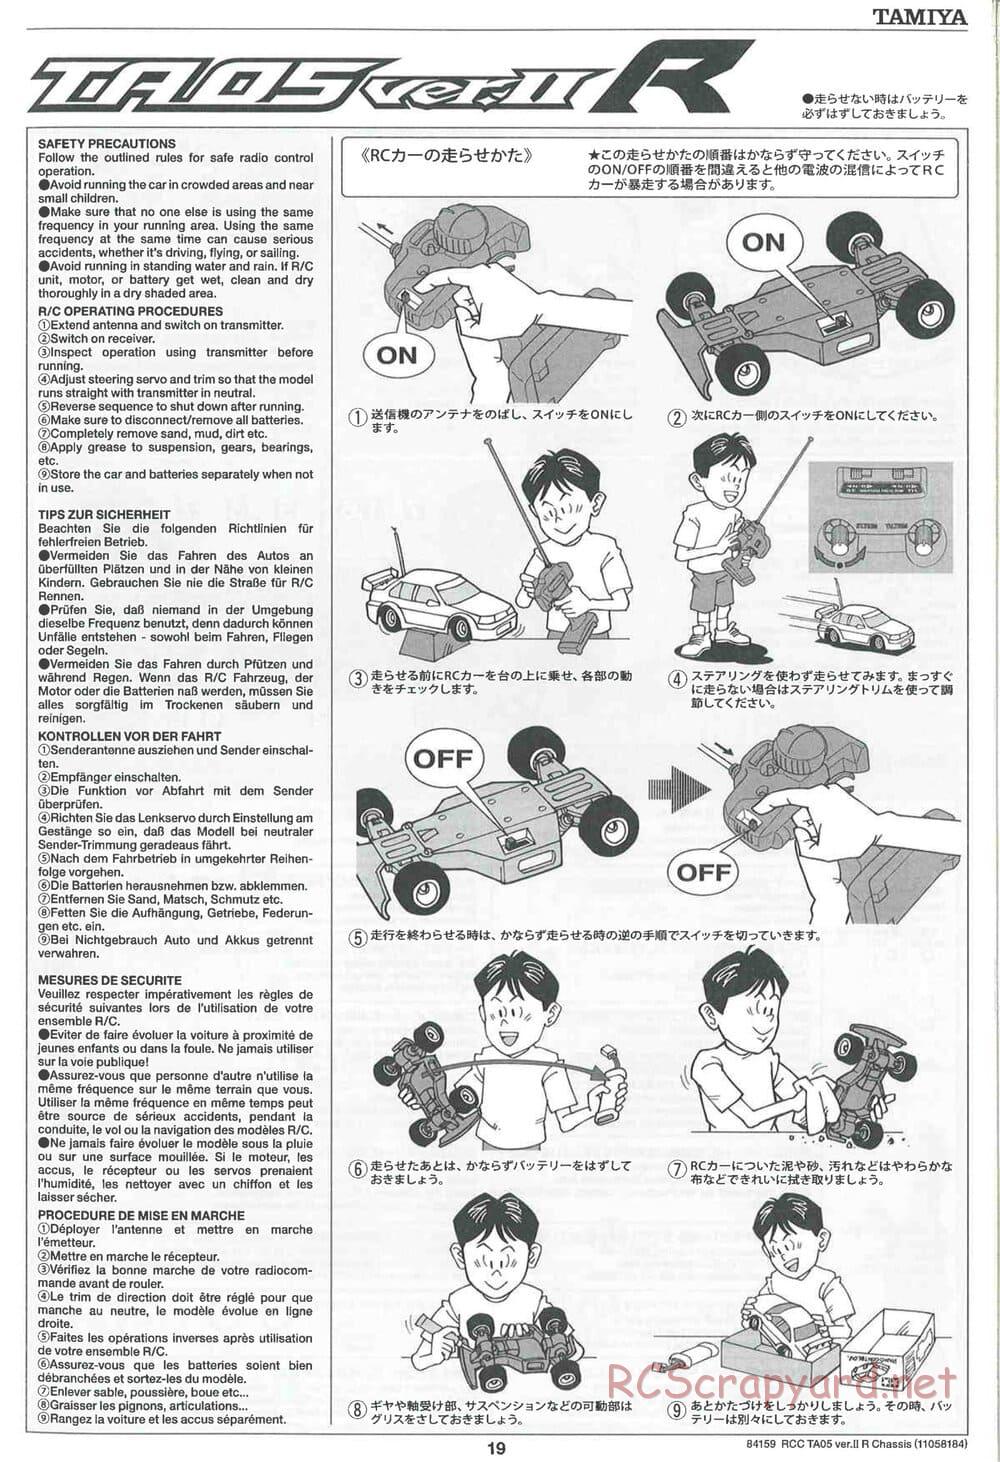 Tamiya - TA05 Ver.II R Chassis - Manual - Page 19